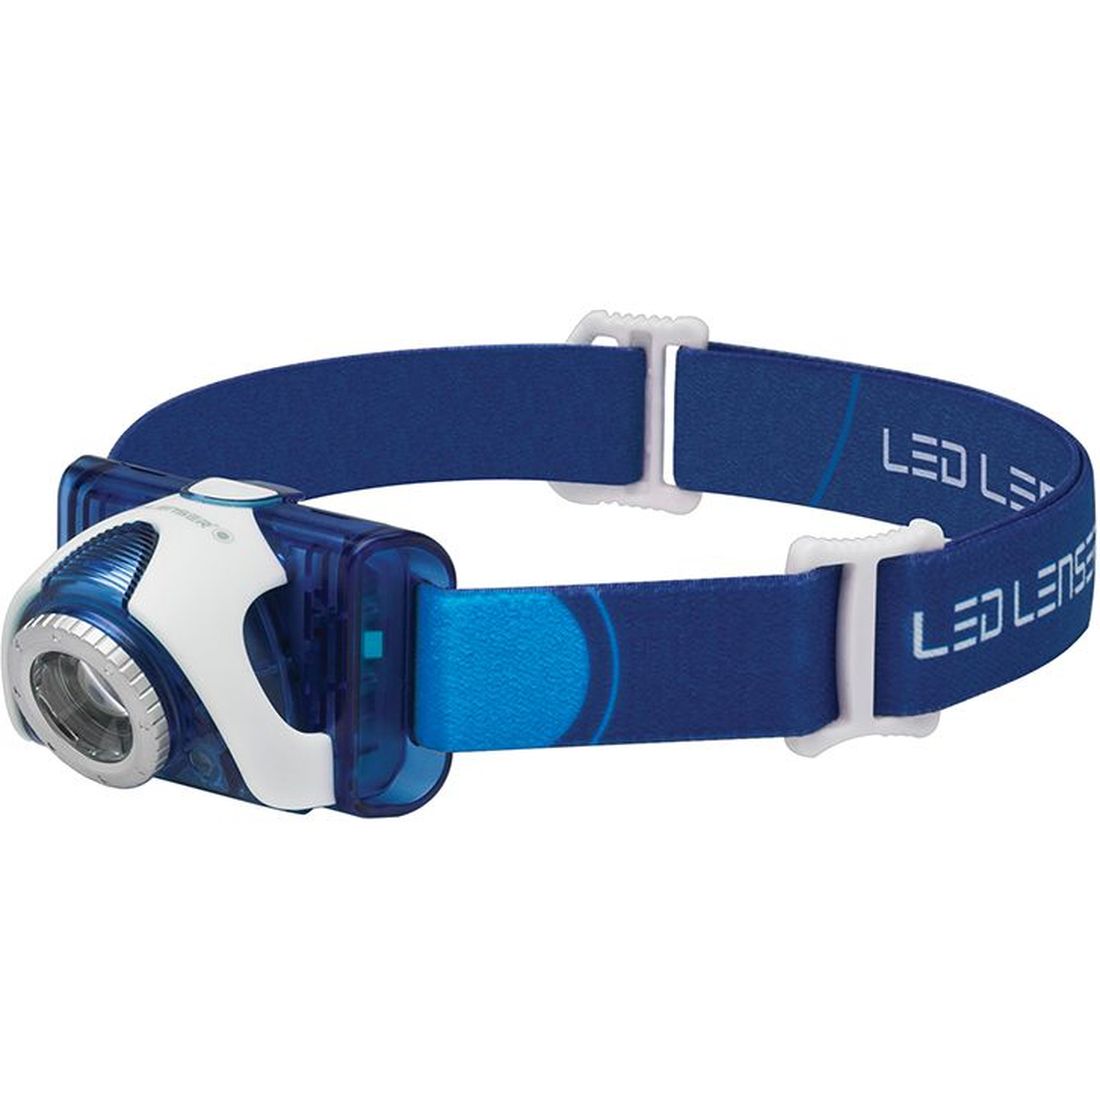 Ledlenser SEO7R Rechargeable LED Headlamp - Blue (Test-It Pack)                           